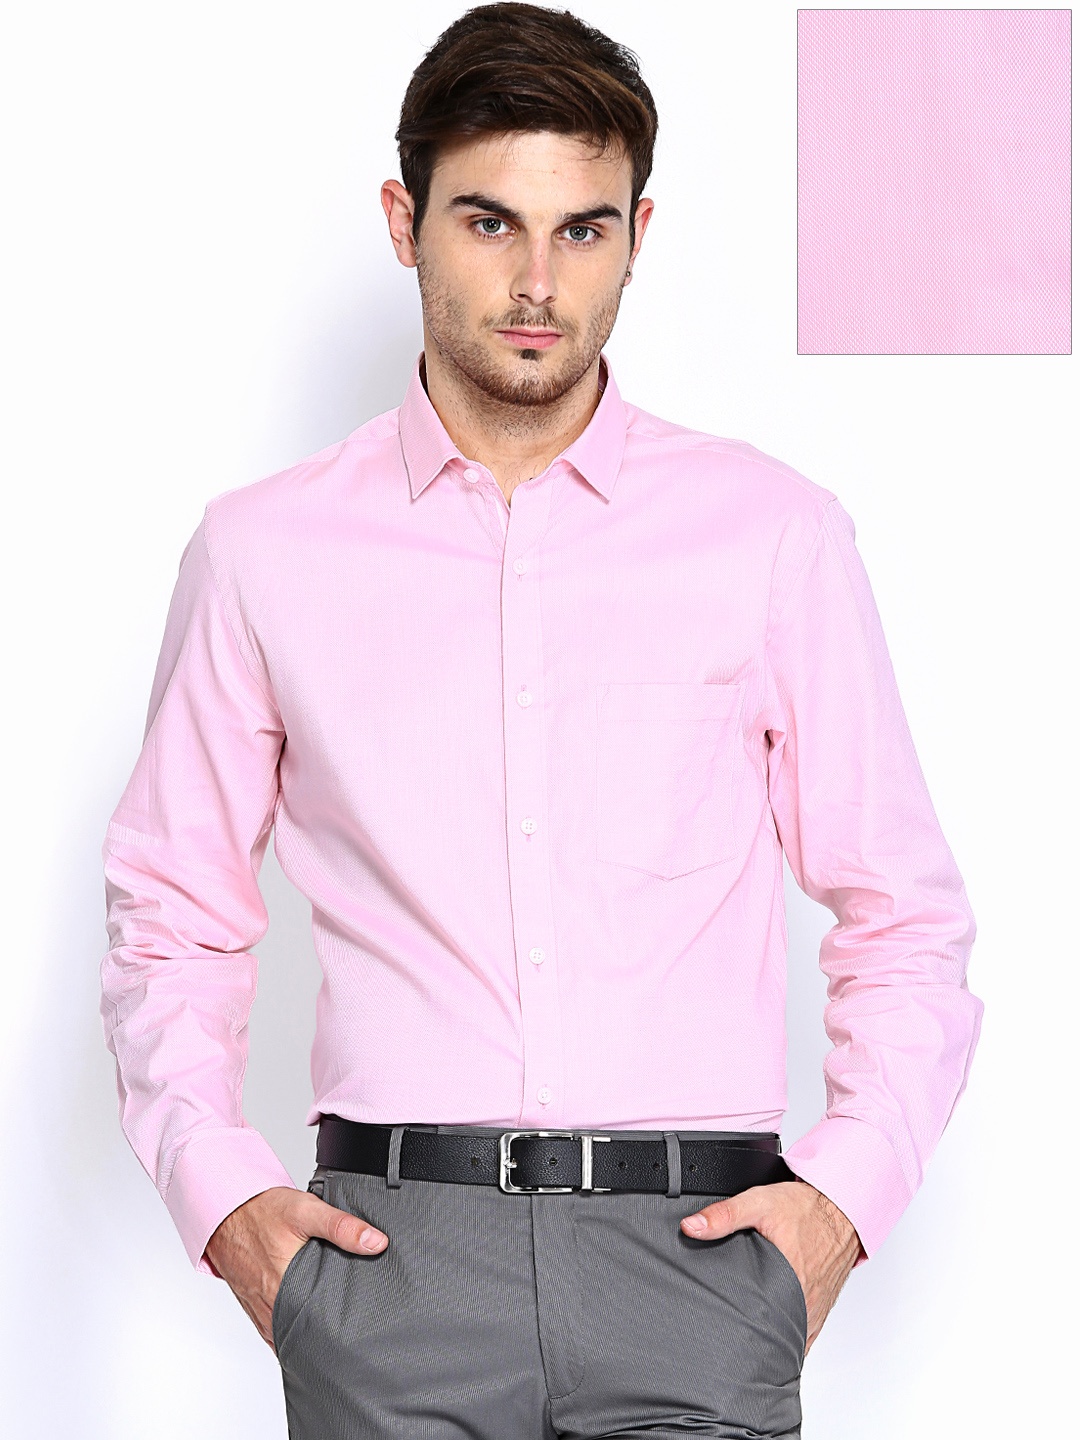 big business band shirts pink